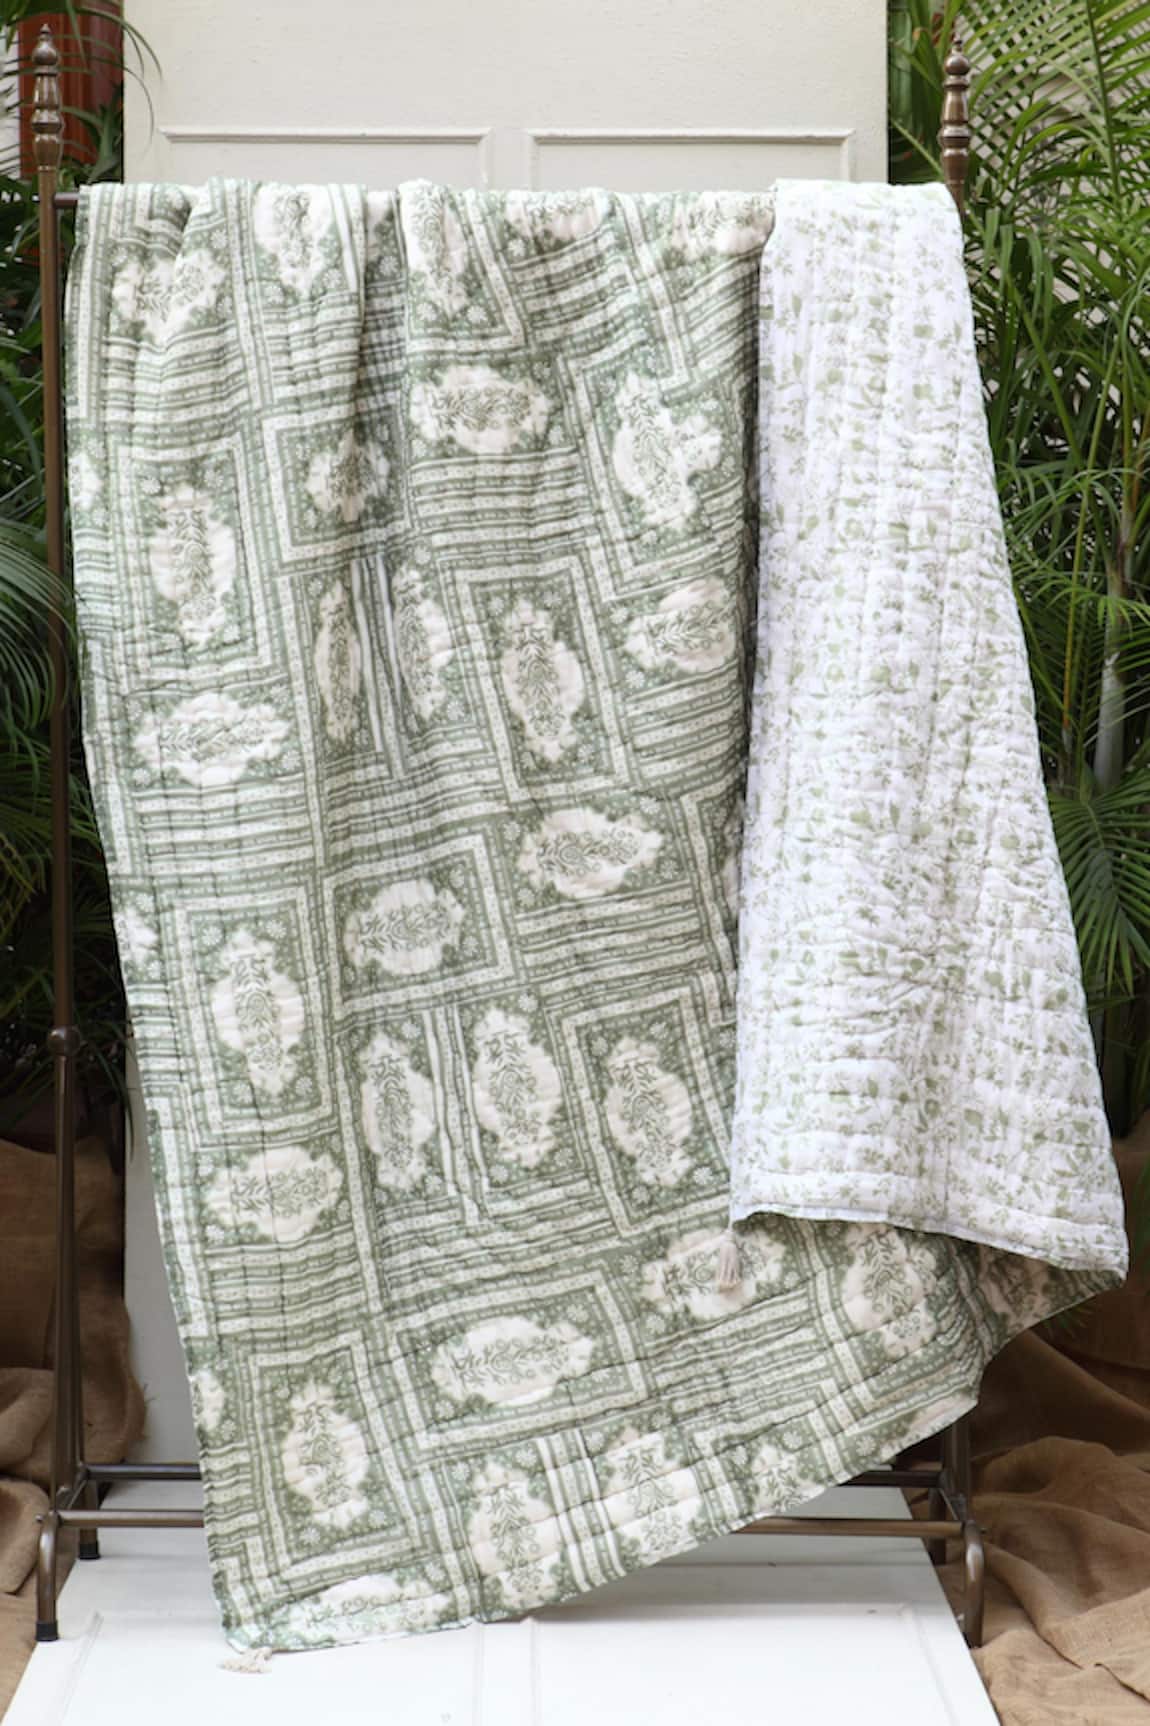 vVyom By Shuchita Tripolia Silk Cotton Reversible Jaipur Quilt